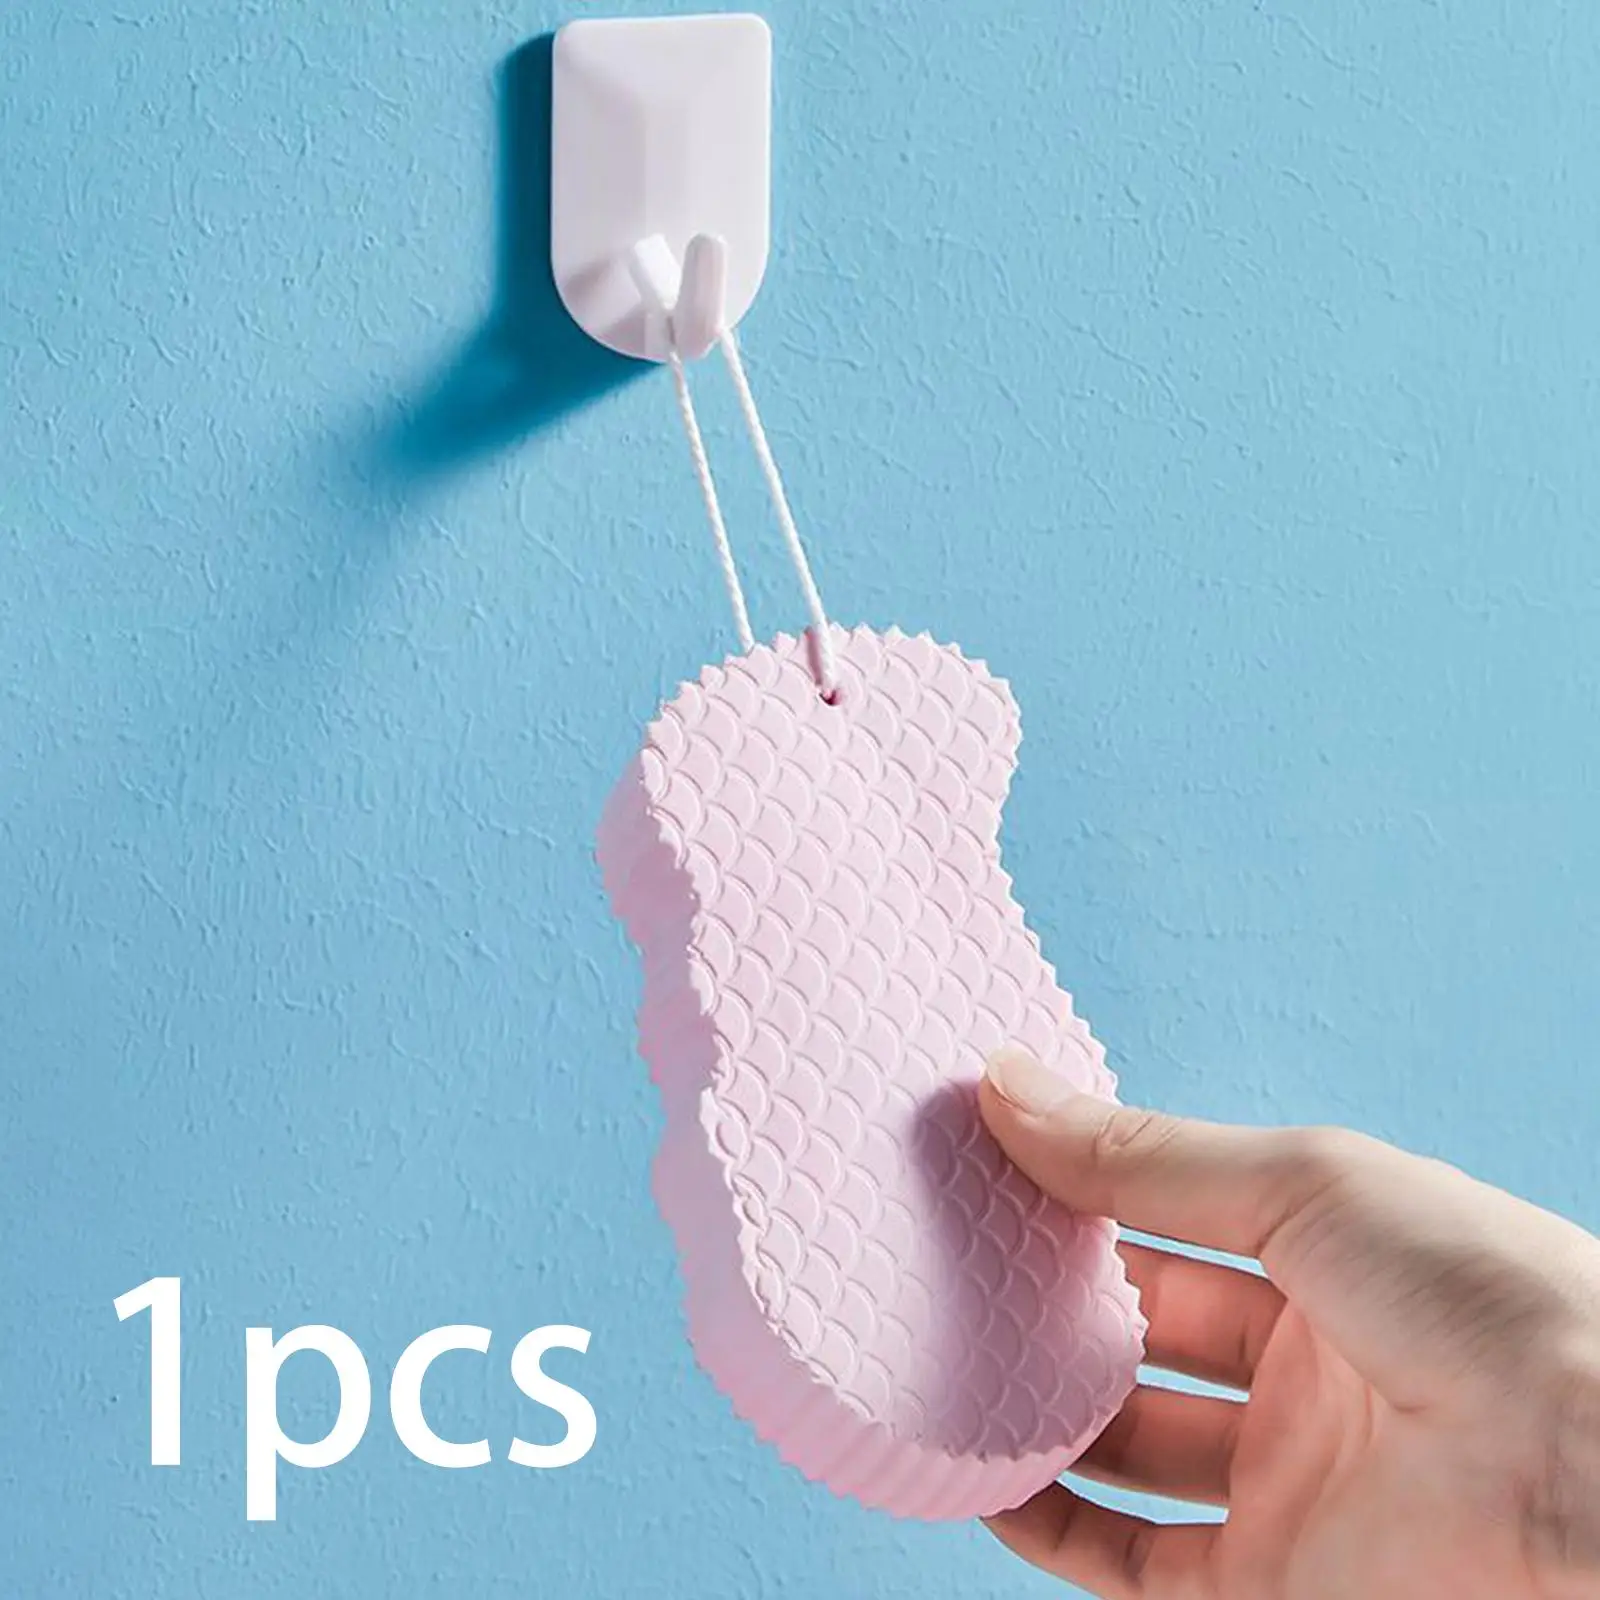 Super Soft Exfoliating Sponge Dead Skin Remover Body Cleansing Supplies W/Hook Shower Brush for Women Children Baby Adults Kids